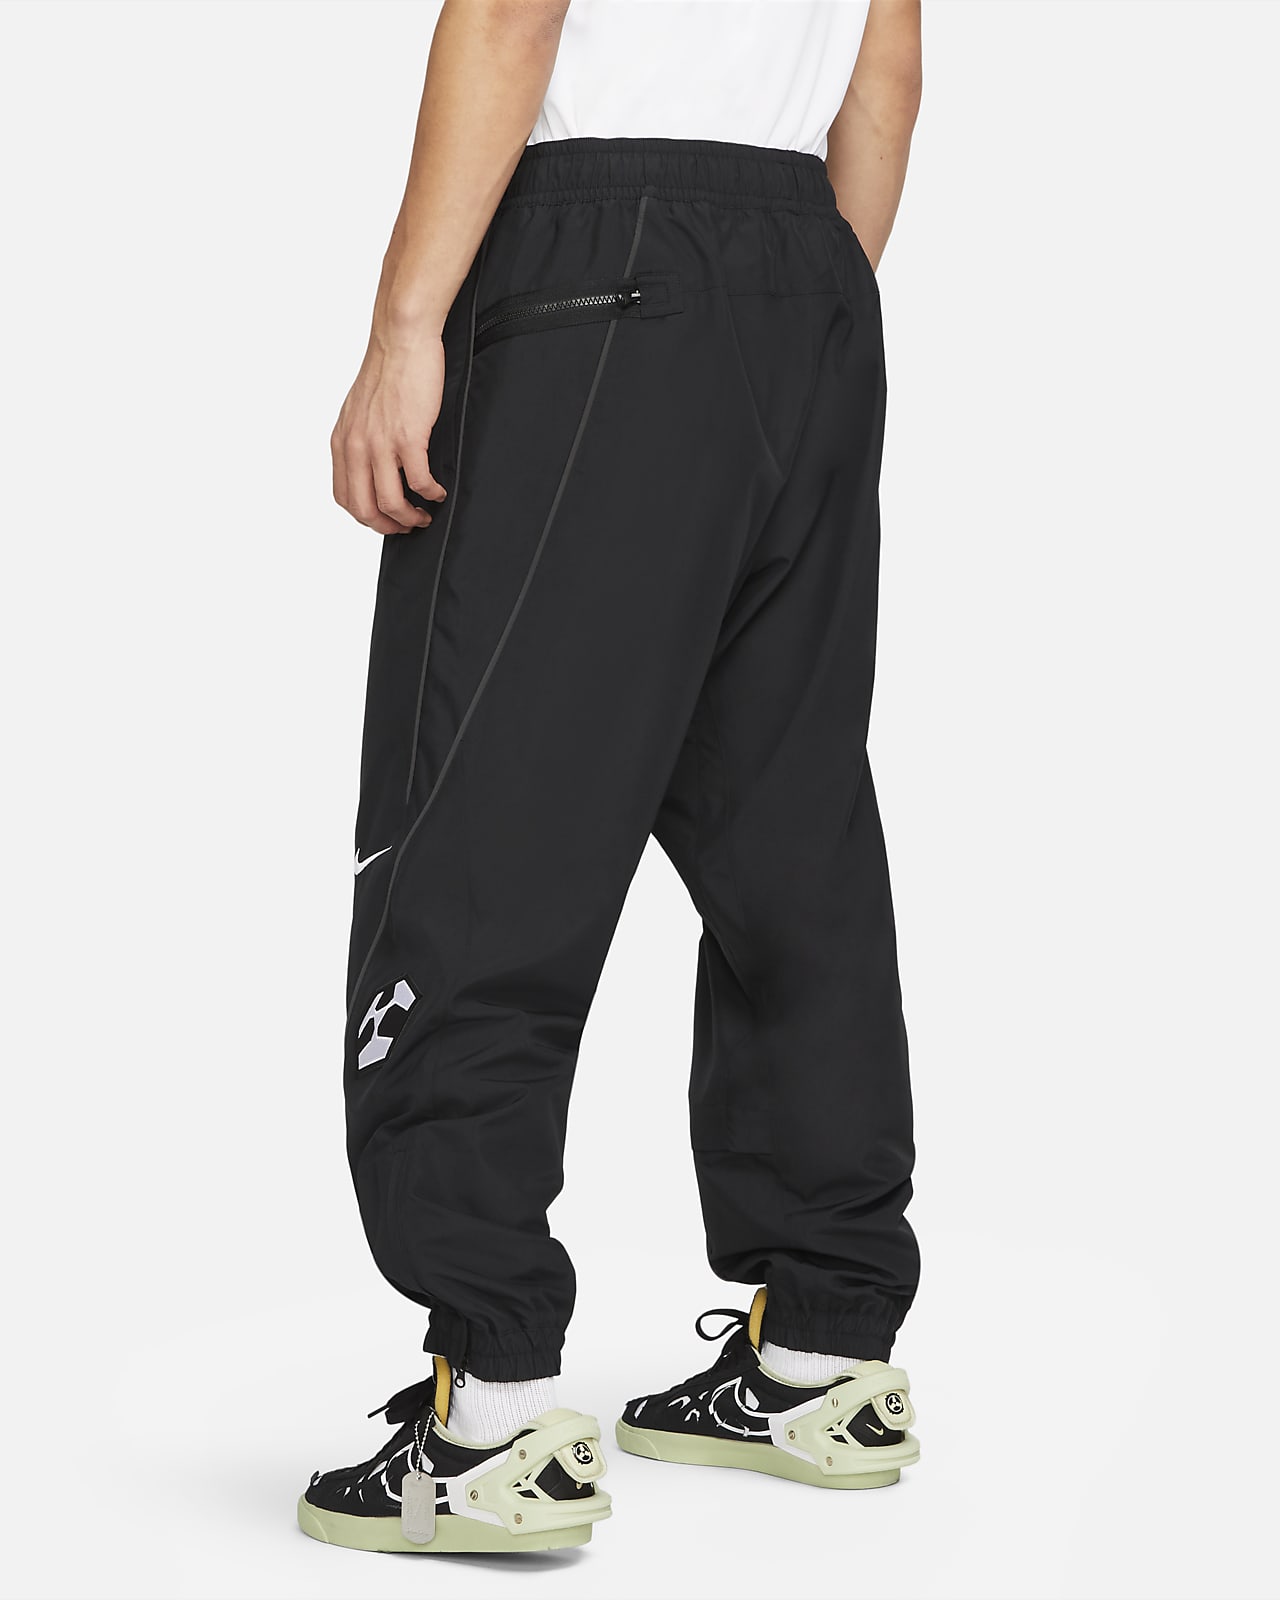 Nike Sportswear Unlined Cuff Woven Pants Mens Gym Training Jogger  DD5311010  eBay